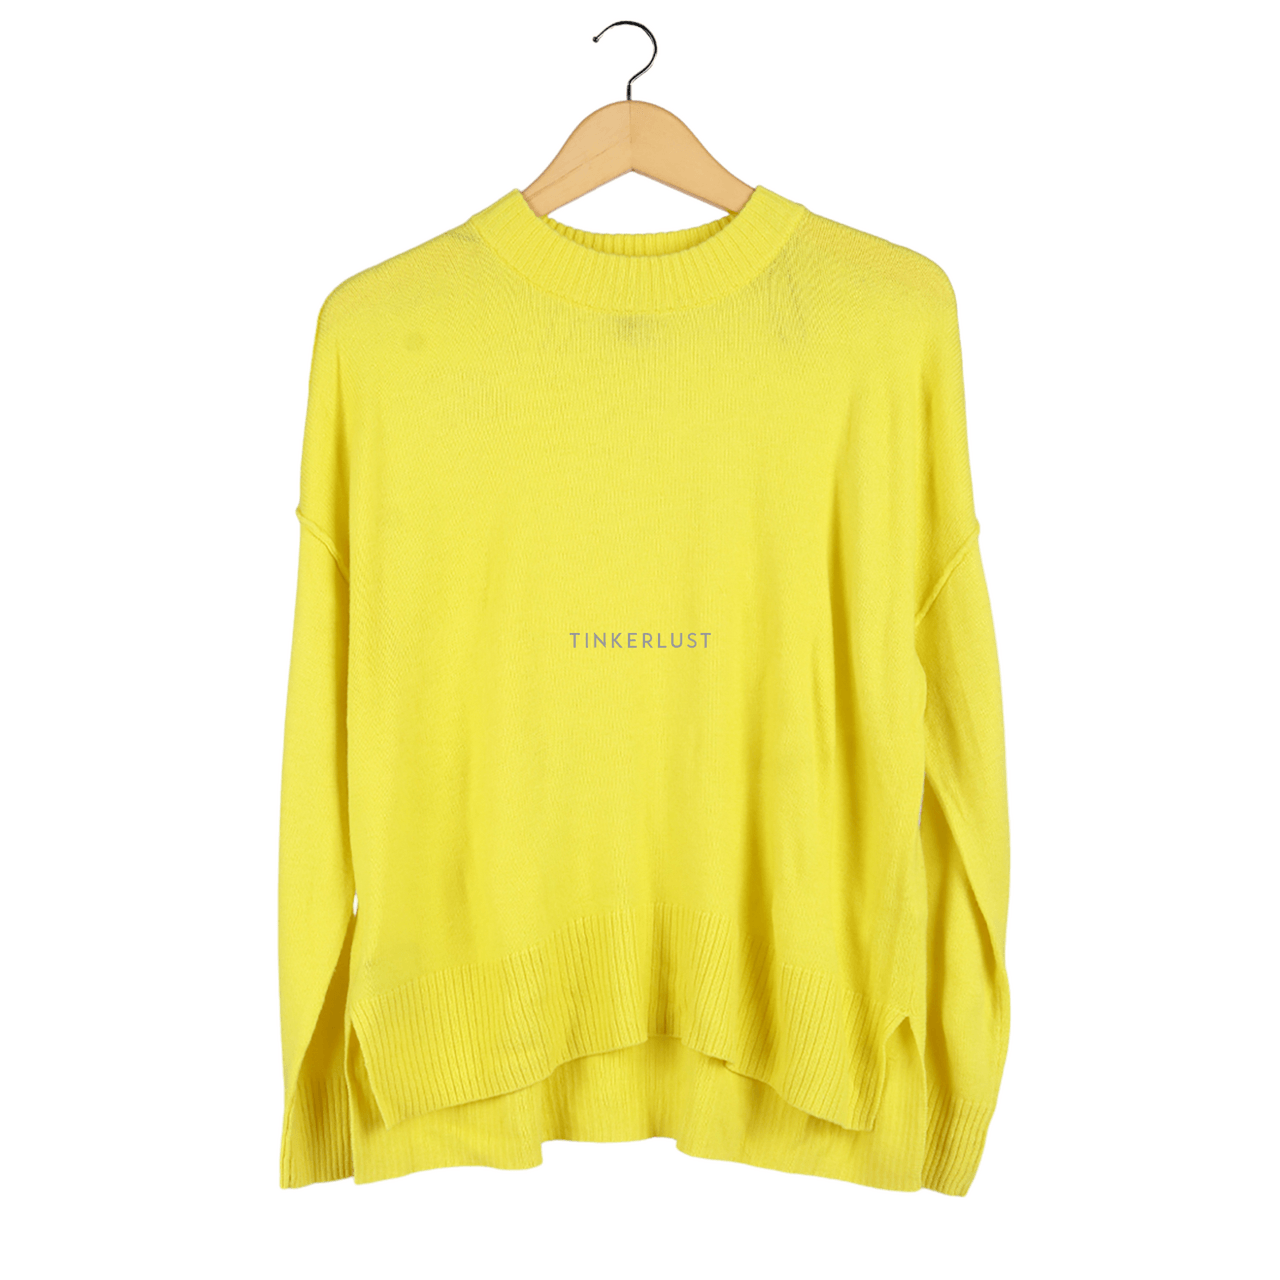 H&M Yellow Sweater